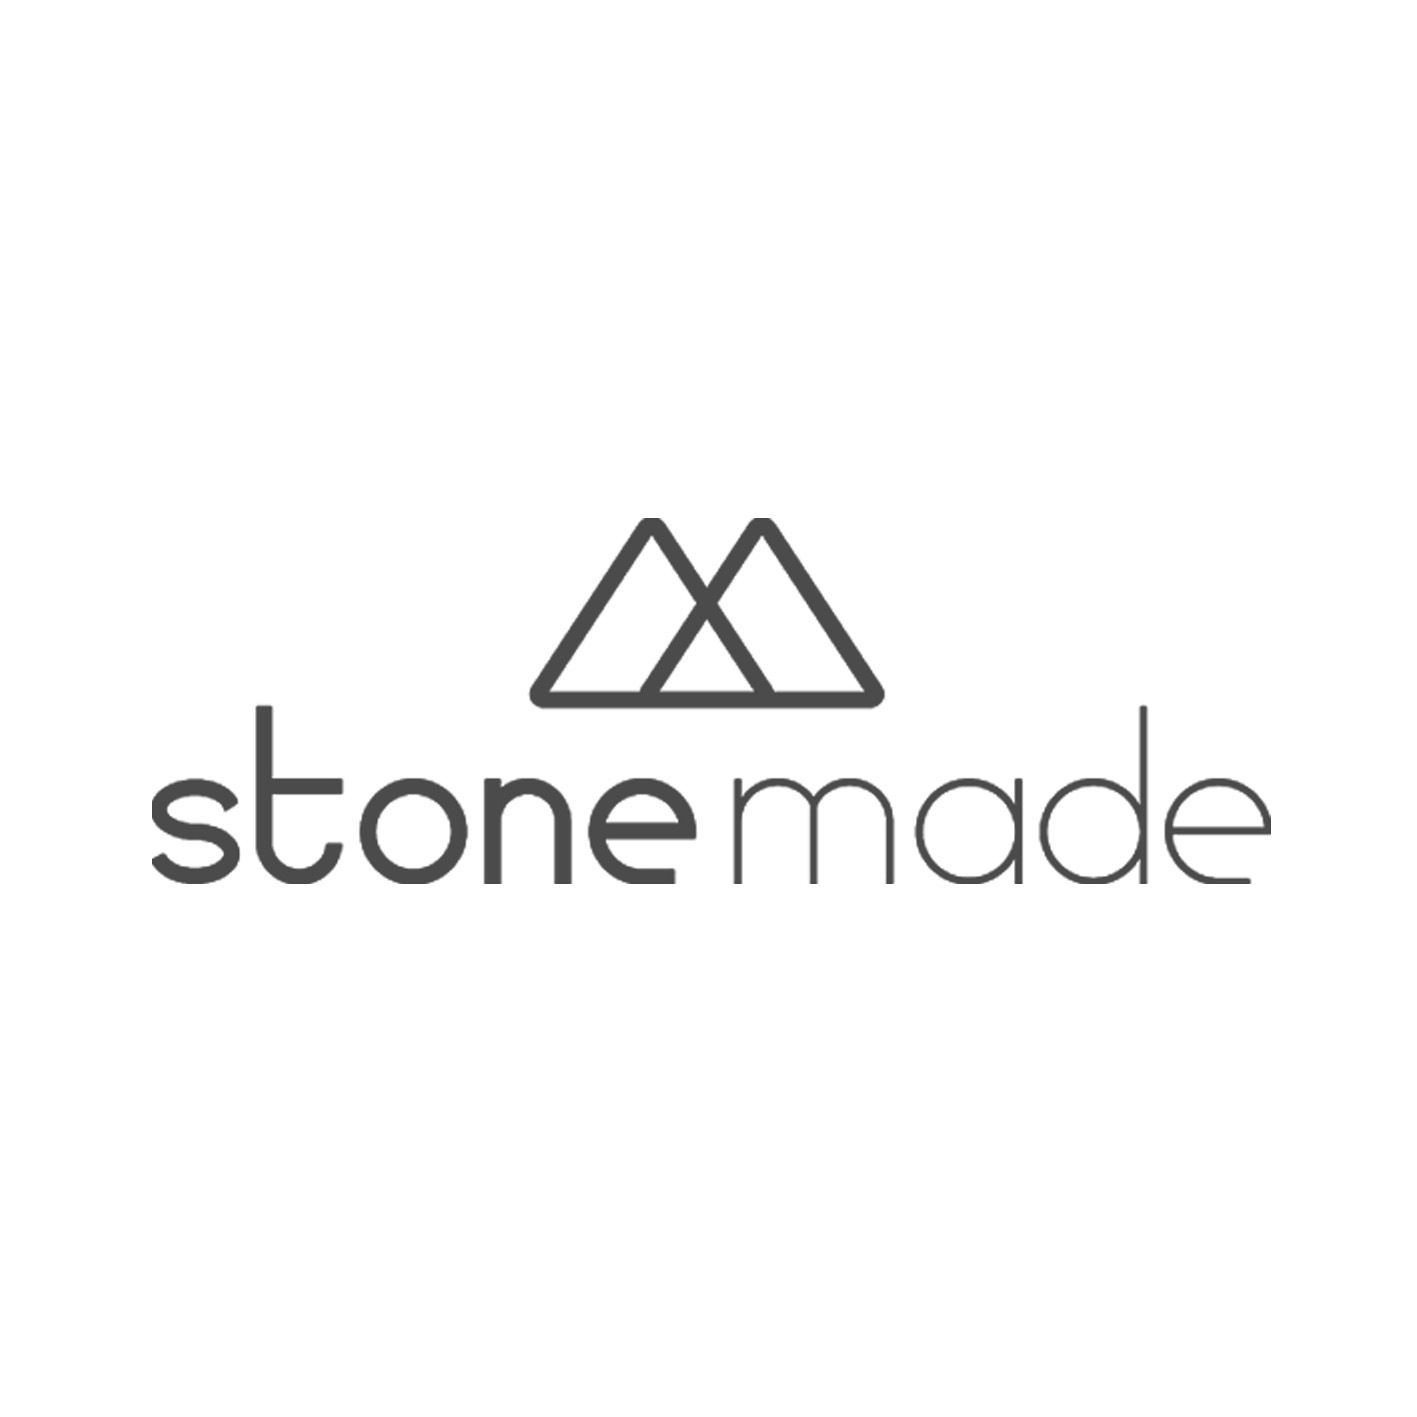 stone made